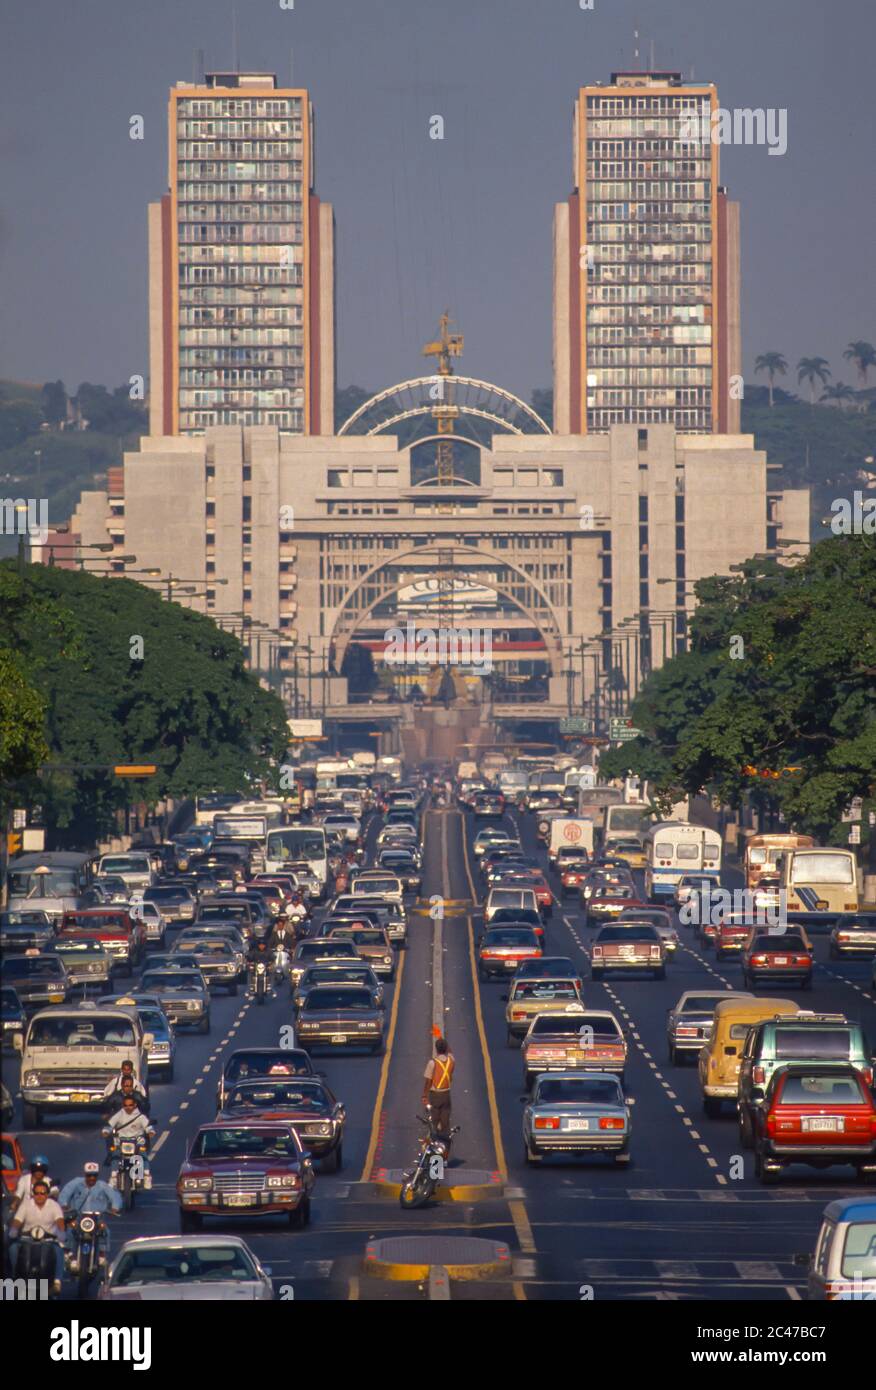 CARACAS, VENEZUELA - Traffic on Avenida Bolivar and twin towers of El Silencio at rear. Stock Photo